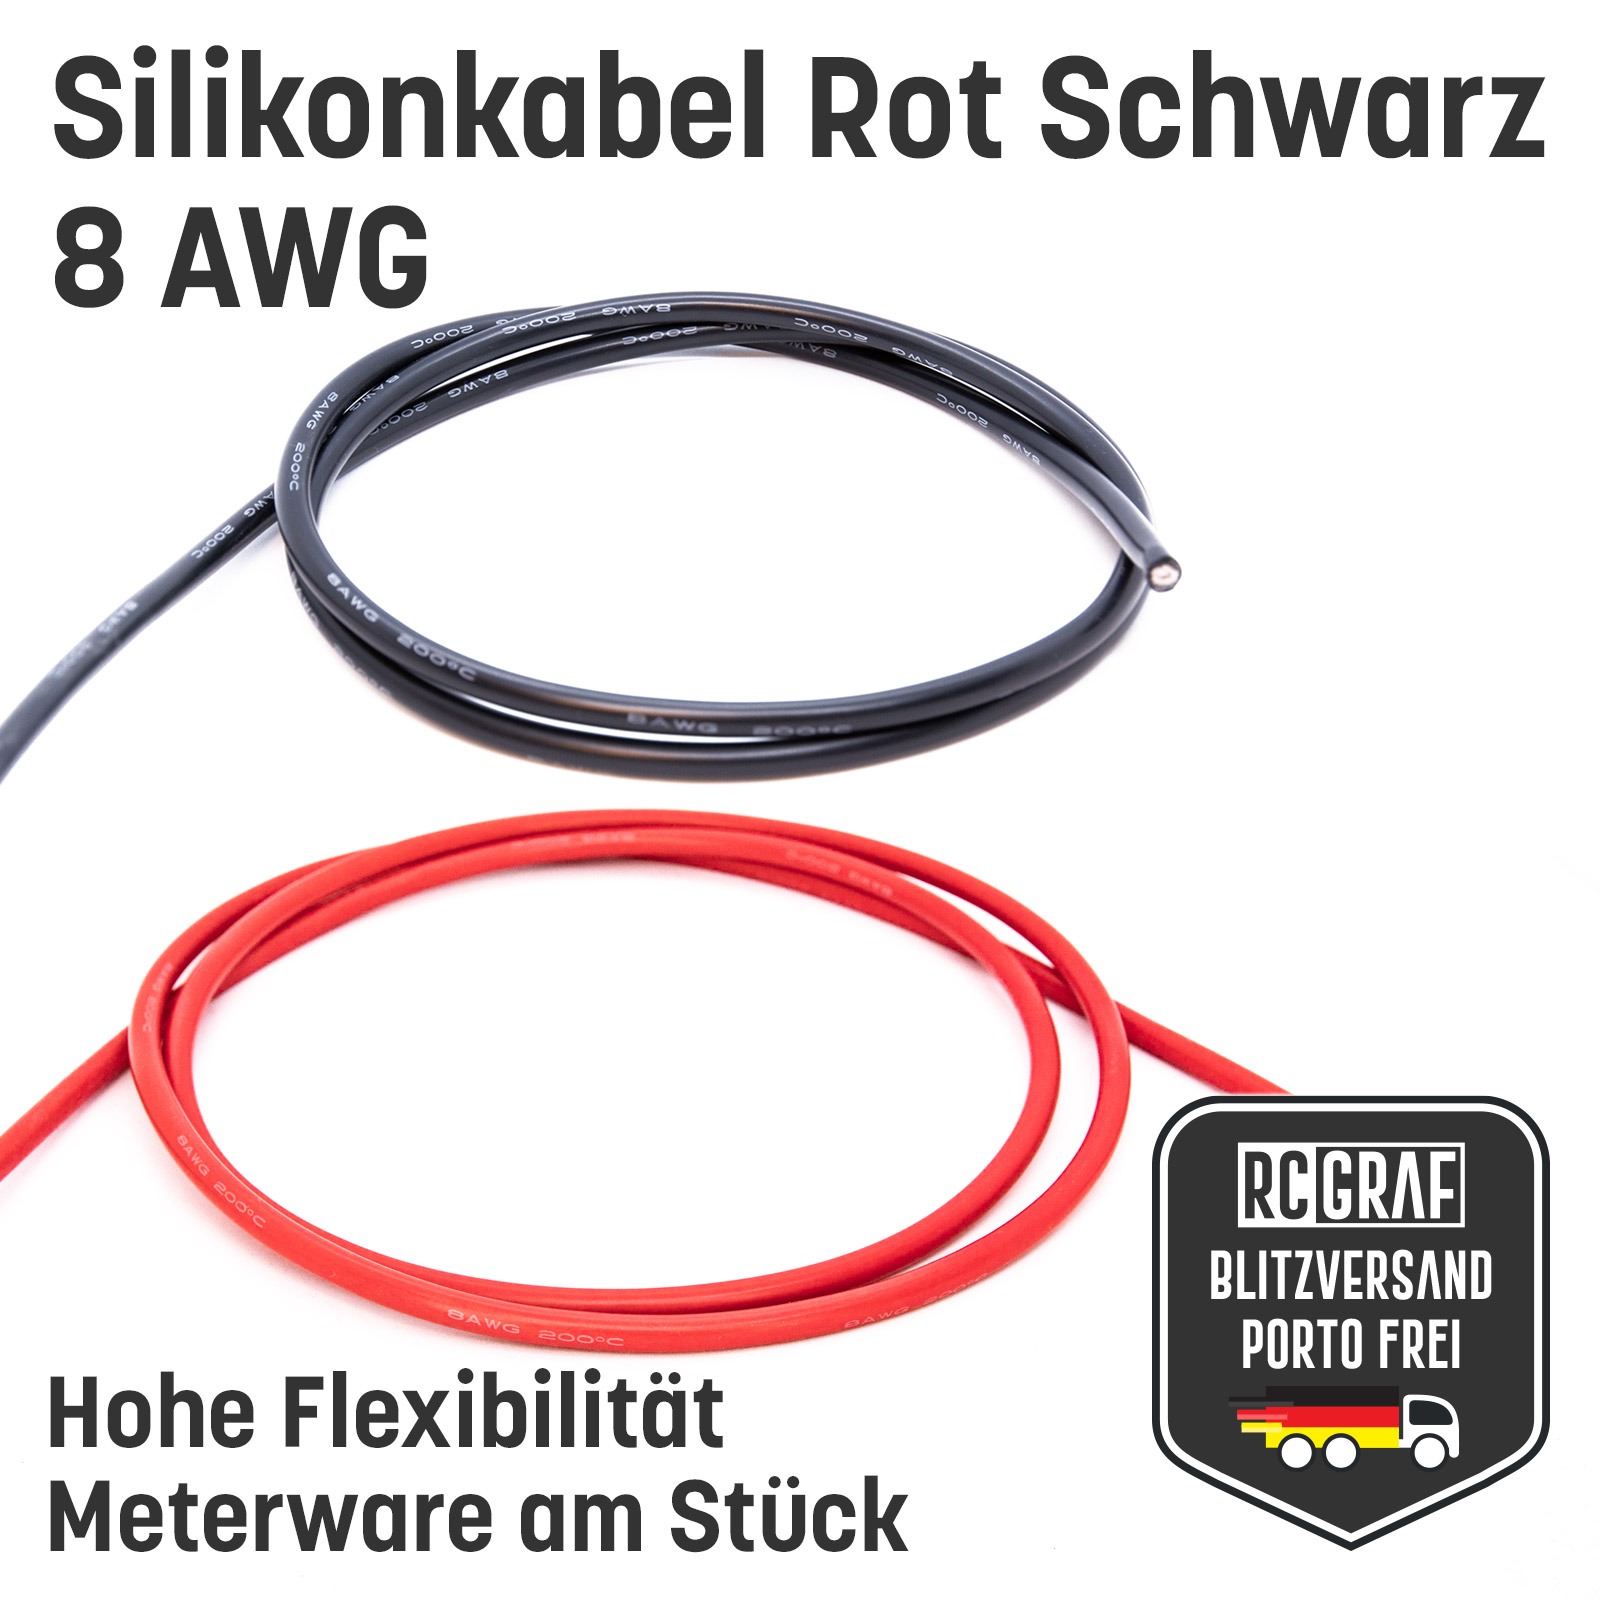 Silikonkabel 8 AWG hochflexibel Rot Schwarz Kupfer RC Kabel 3